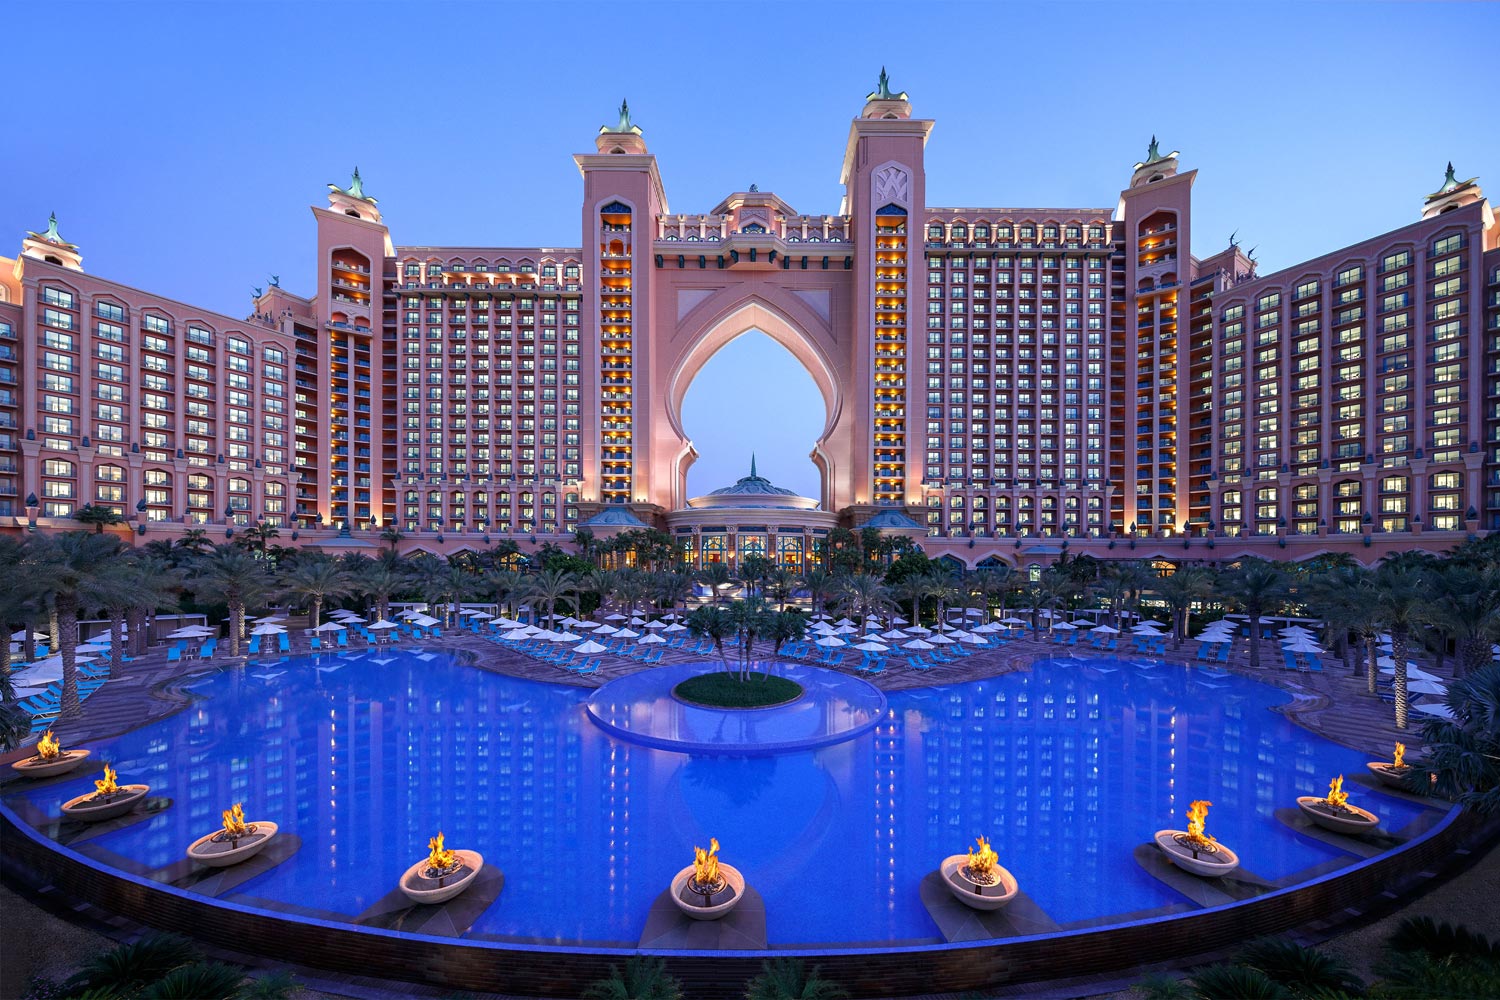 Atlantis The Palm Dubais Iconic Five Star Hotel And Luxury Resort My Xxx Hot Girl